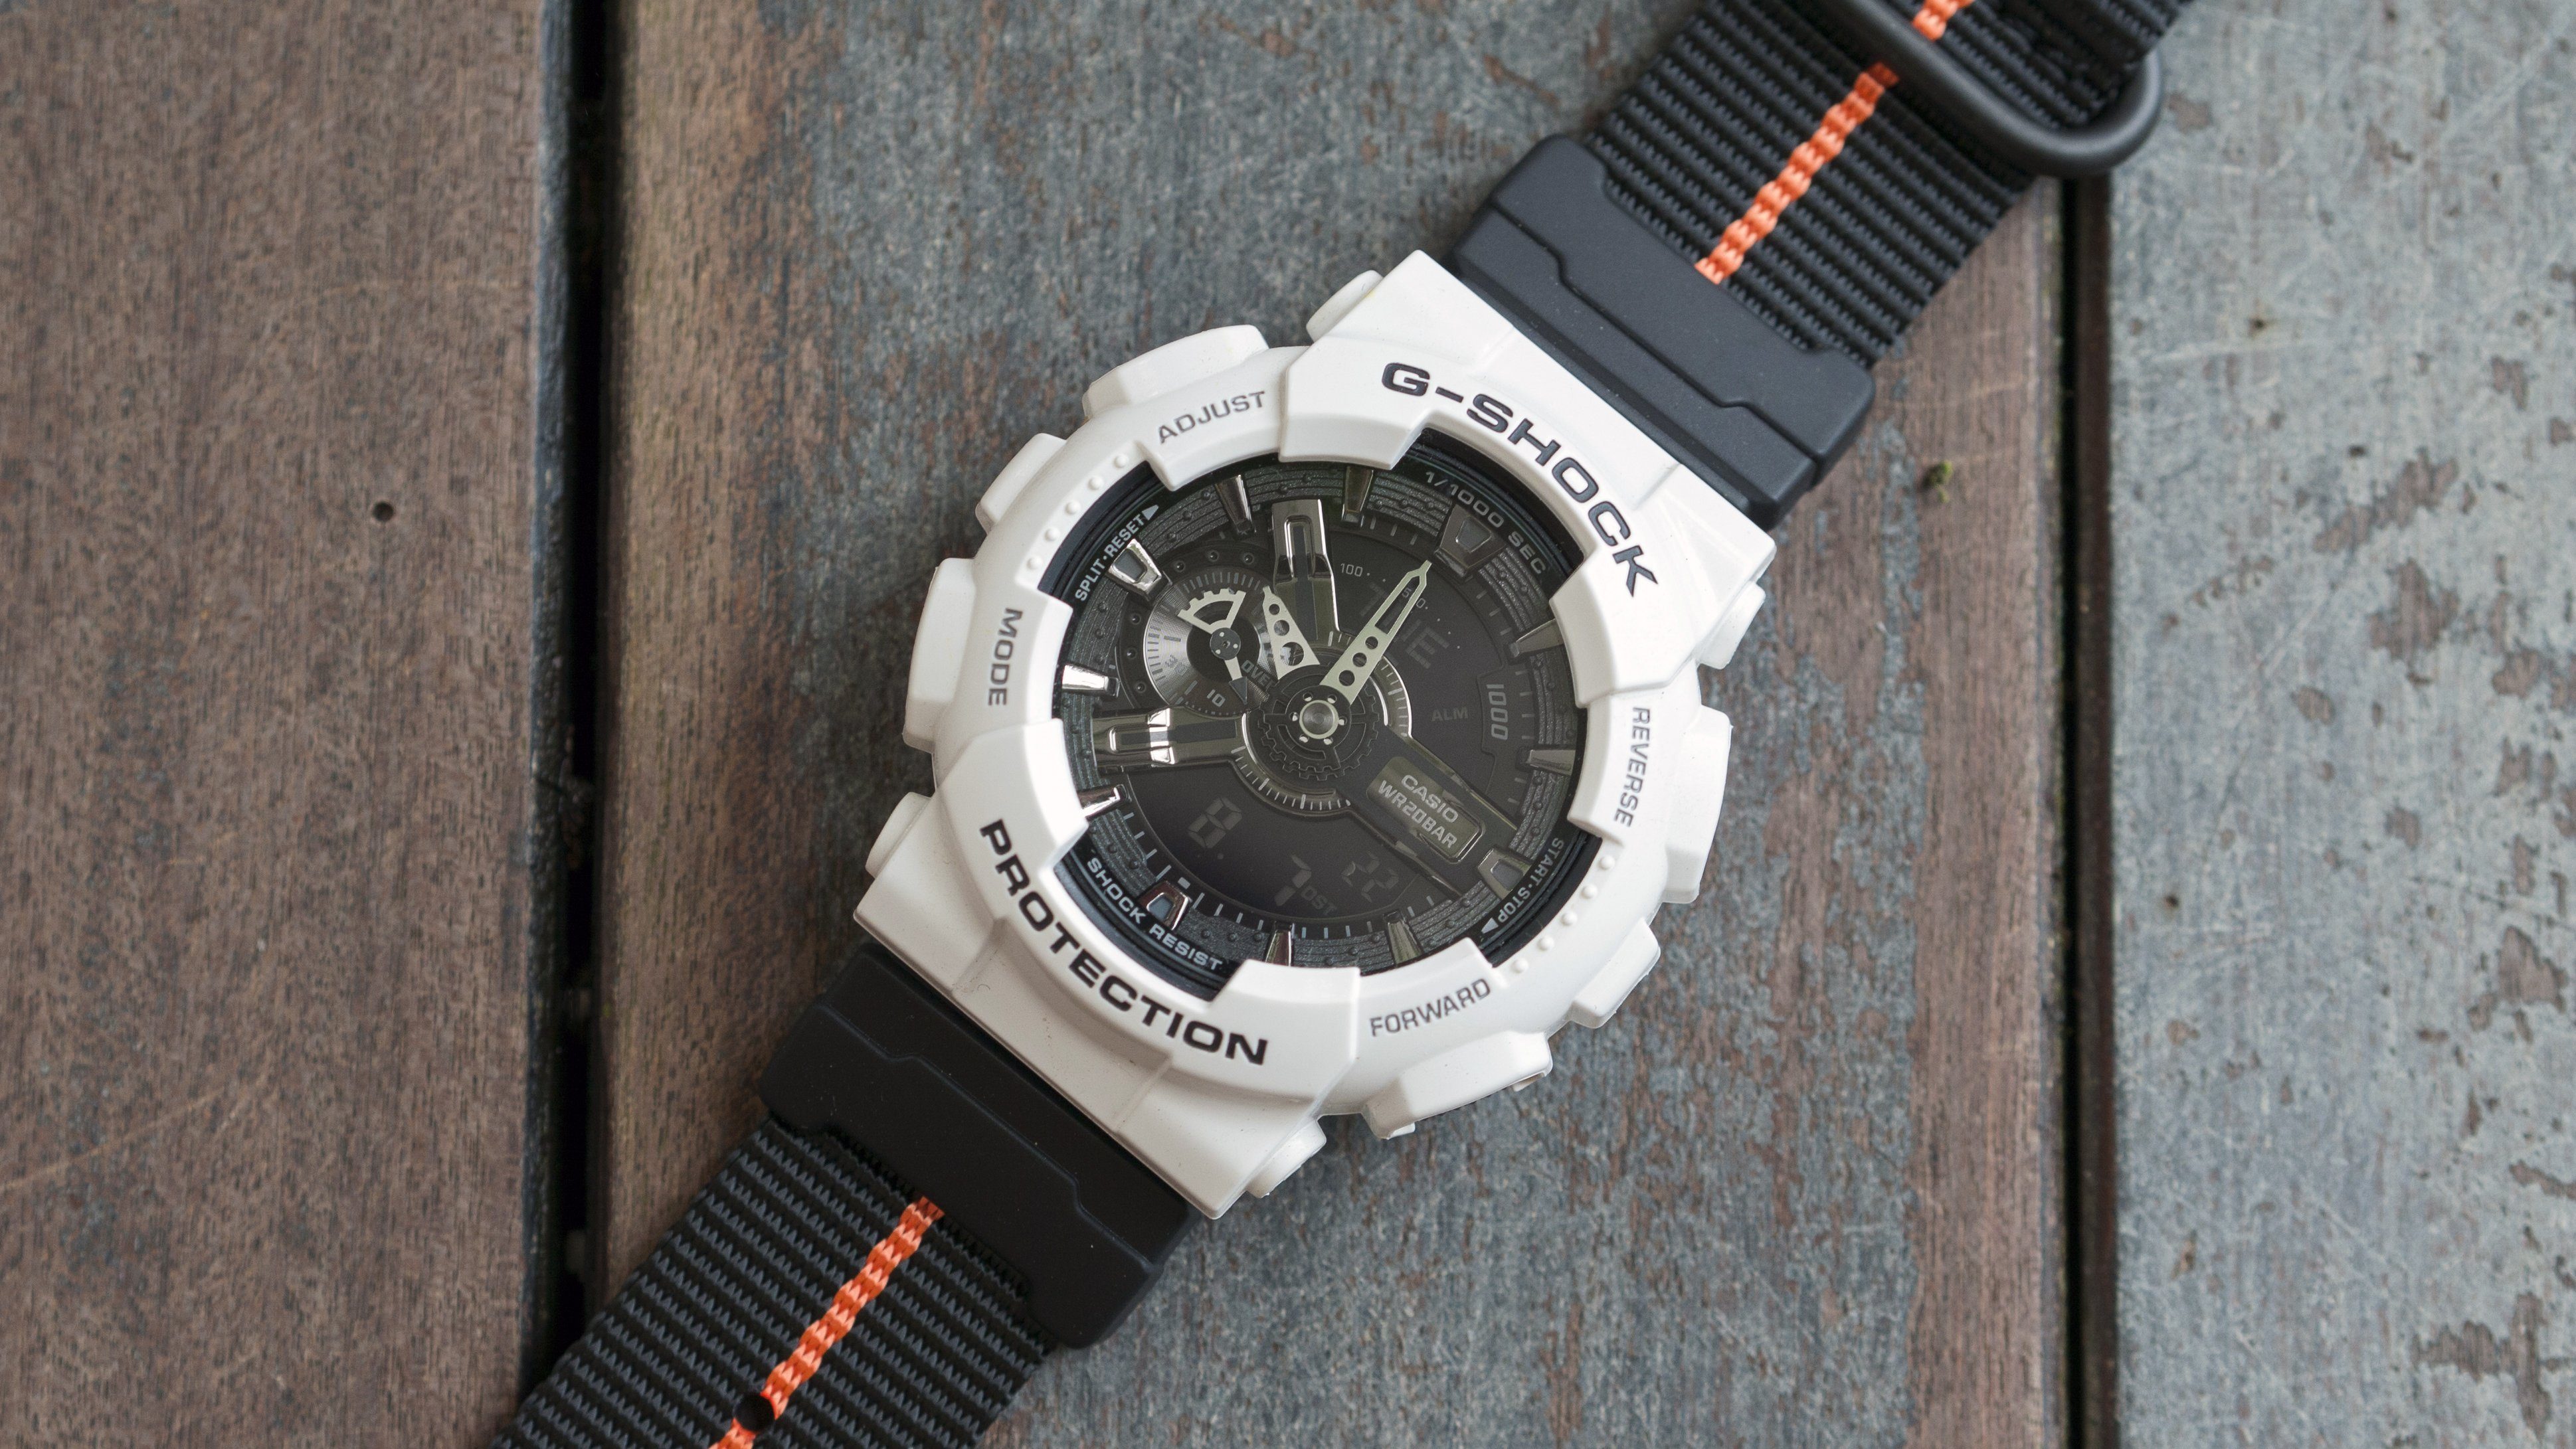 gshock ga110 with vario ballistic nylon watch strap with casio adapter black and orange 